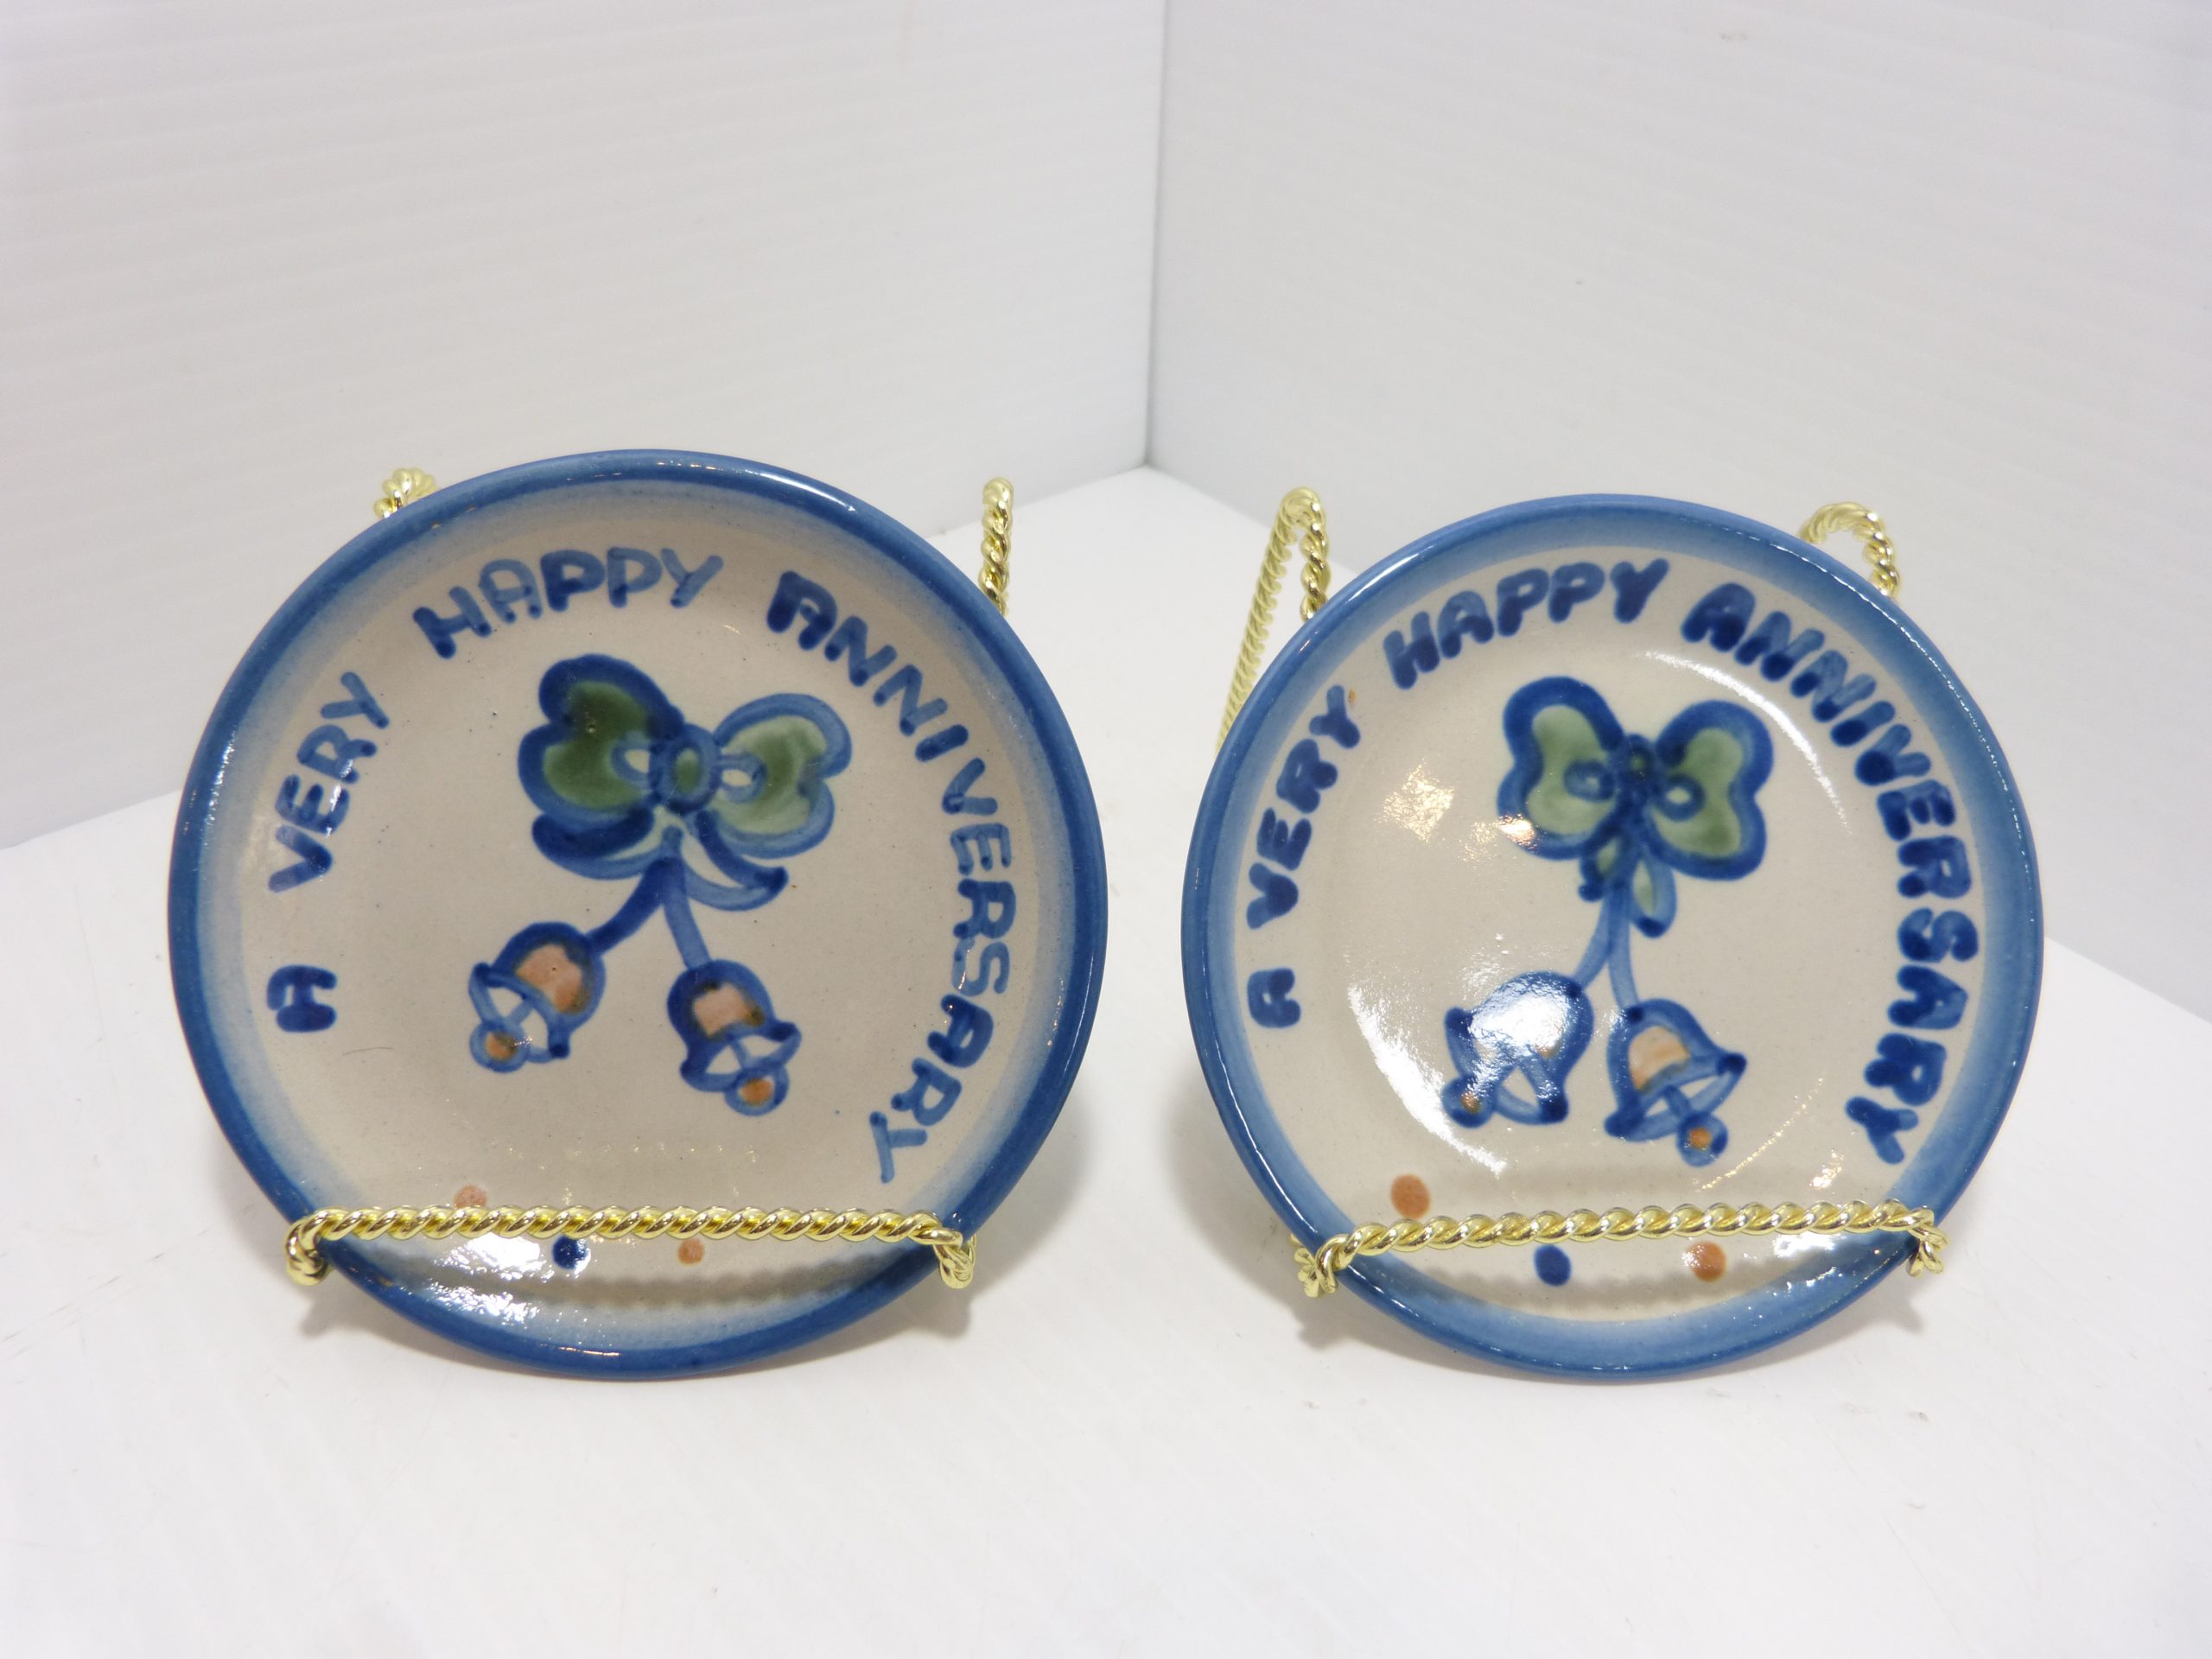 MA Hadley Pottery A Very Happy Anniversary Coaster/Small Plate Set of 2 - 4 1/4"